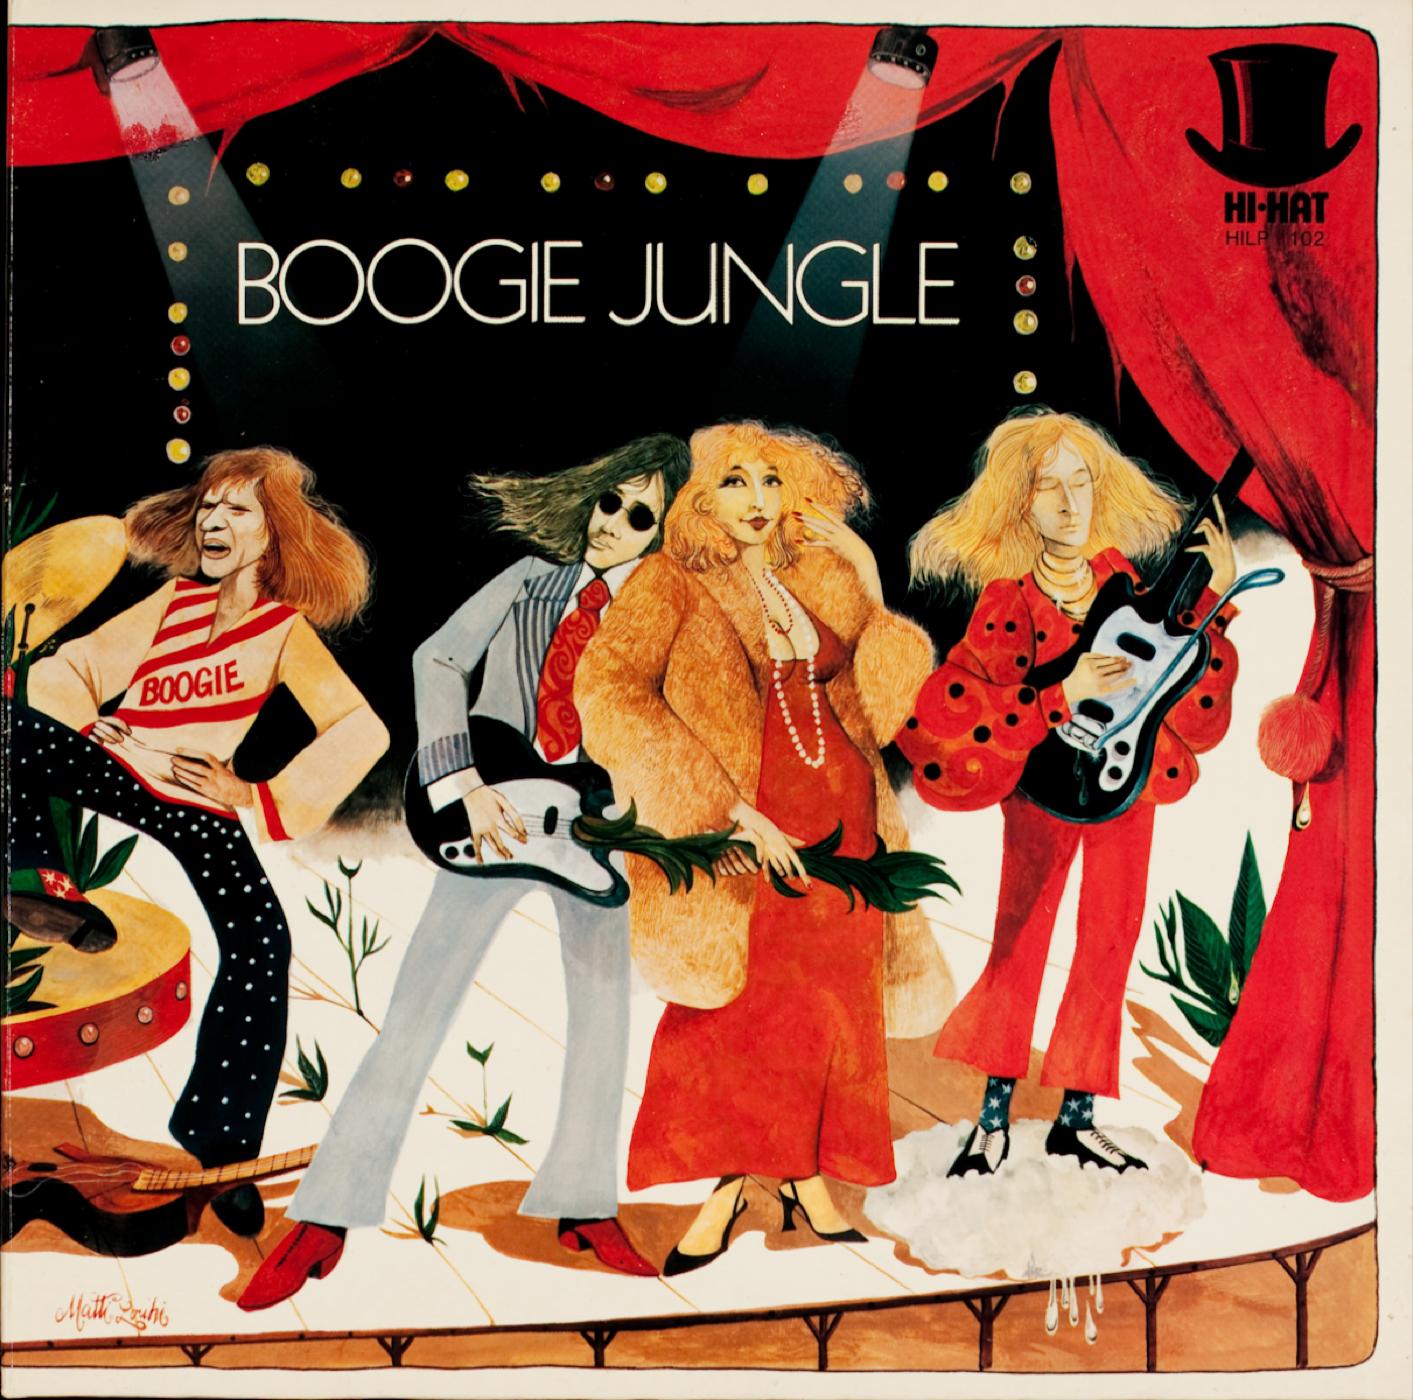 Boogie Jungle